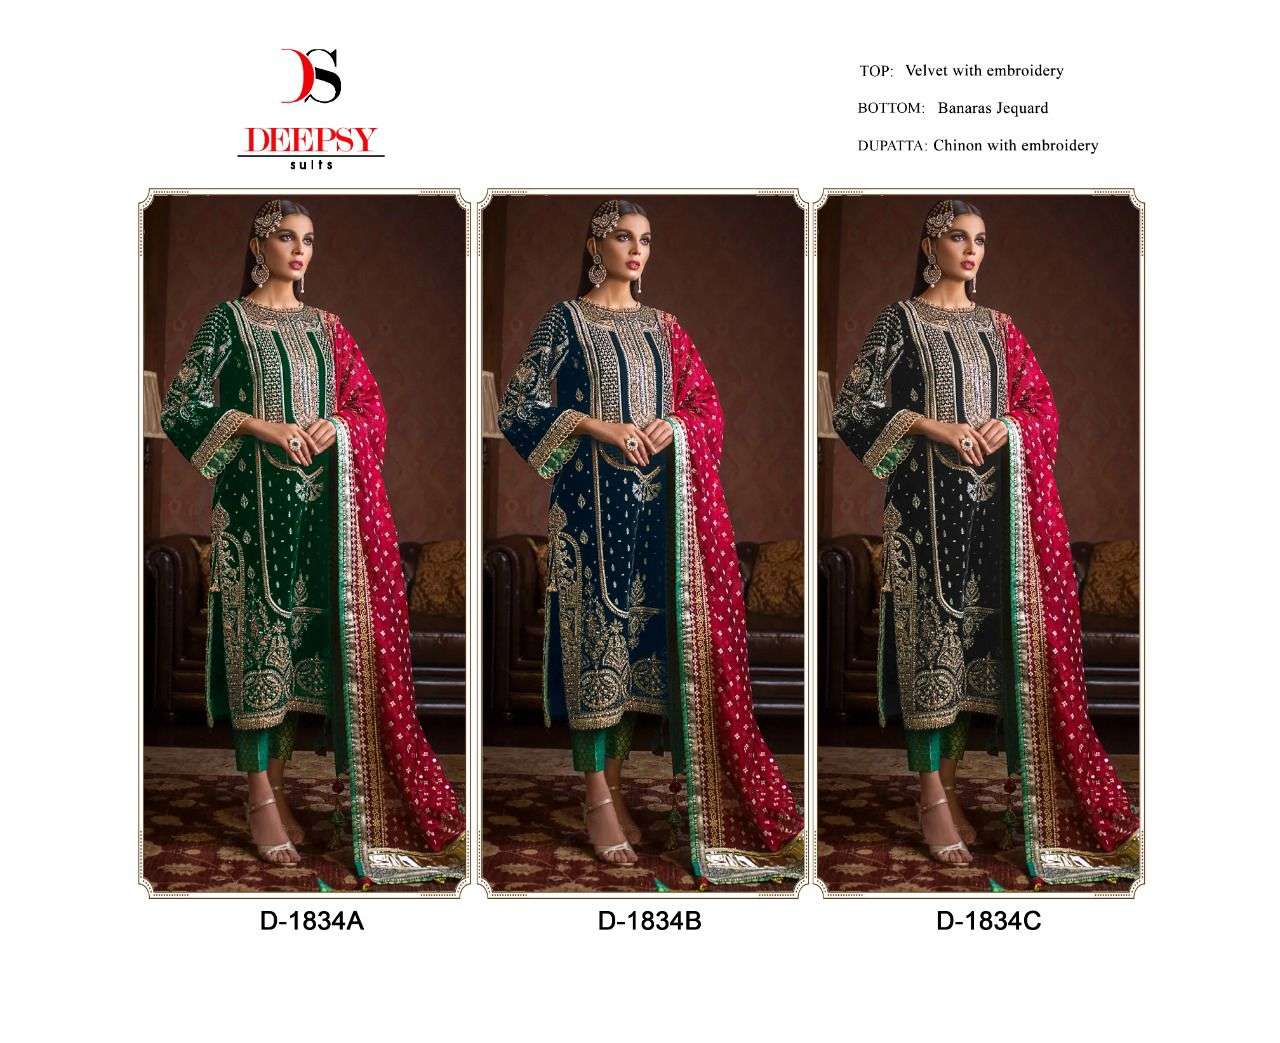 deepsy suits anaya velvet 1834 colours designer look embroidered velvet suits collection surat